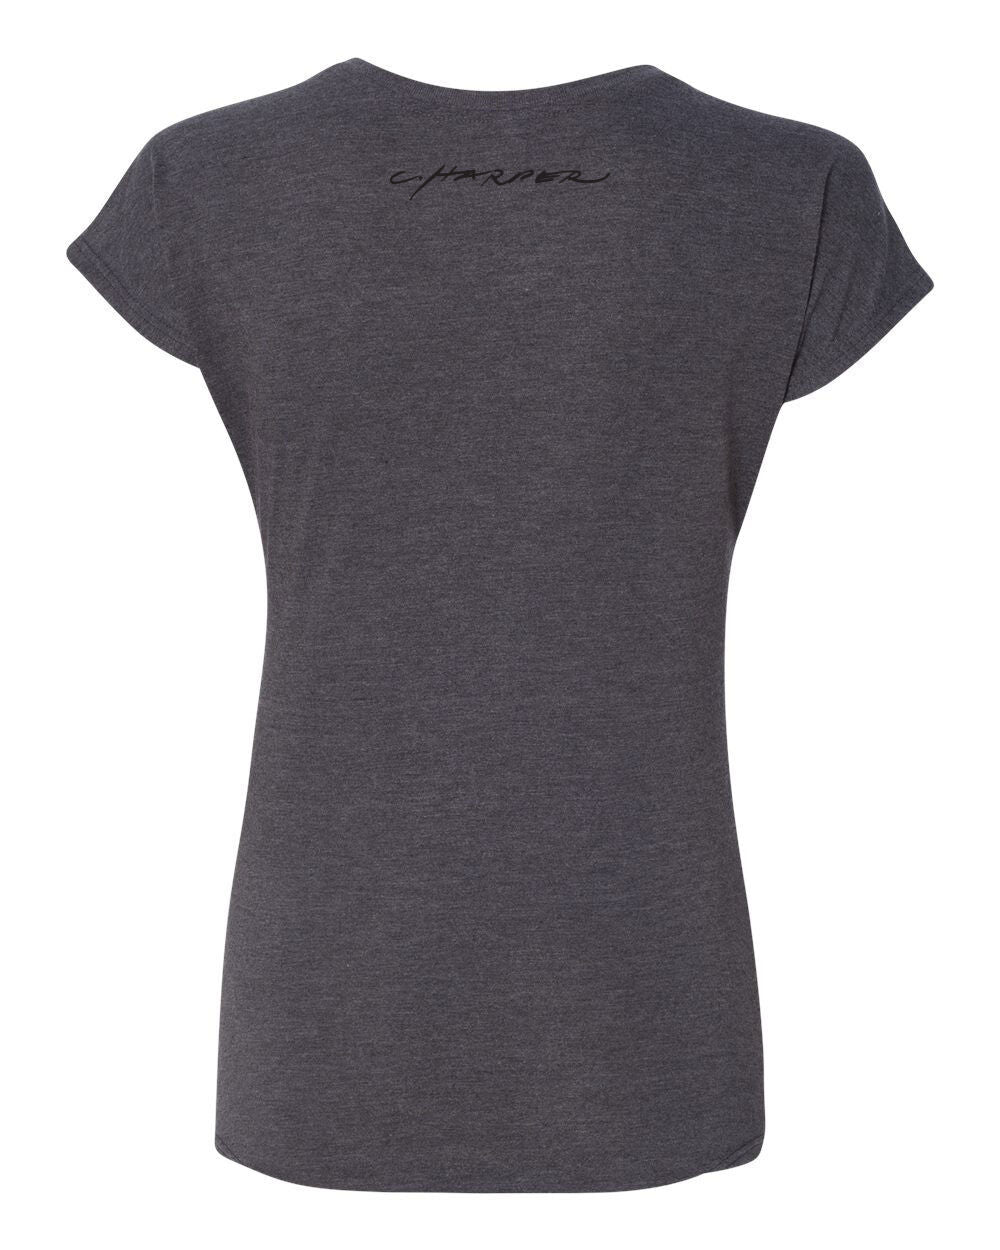 Charley Harper's Roving Raptors Adult Denim T-Shirt X-Large